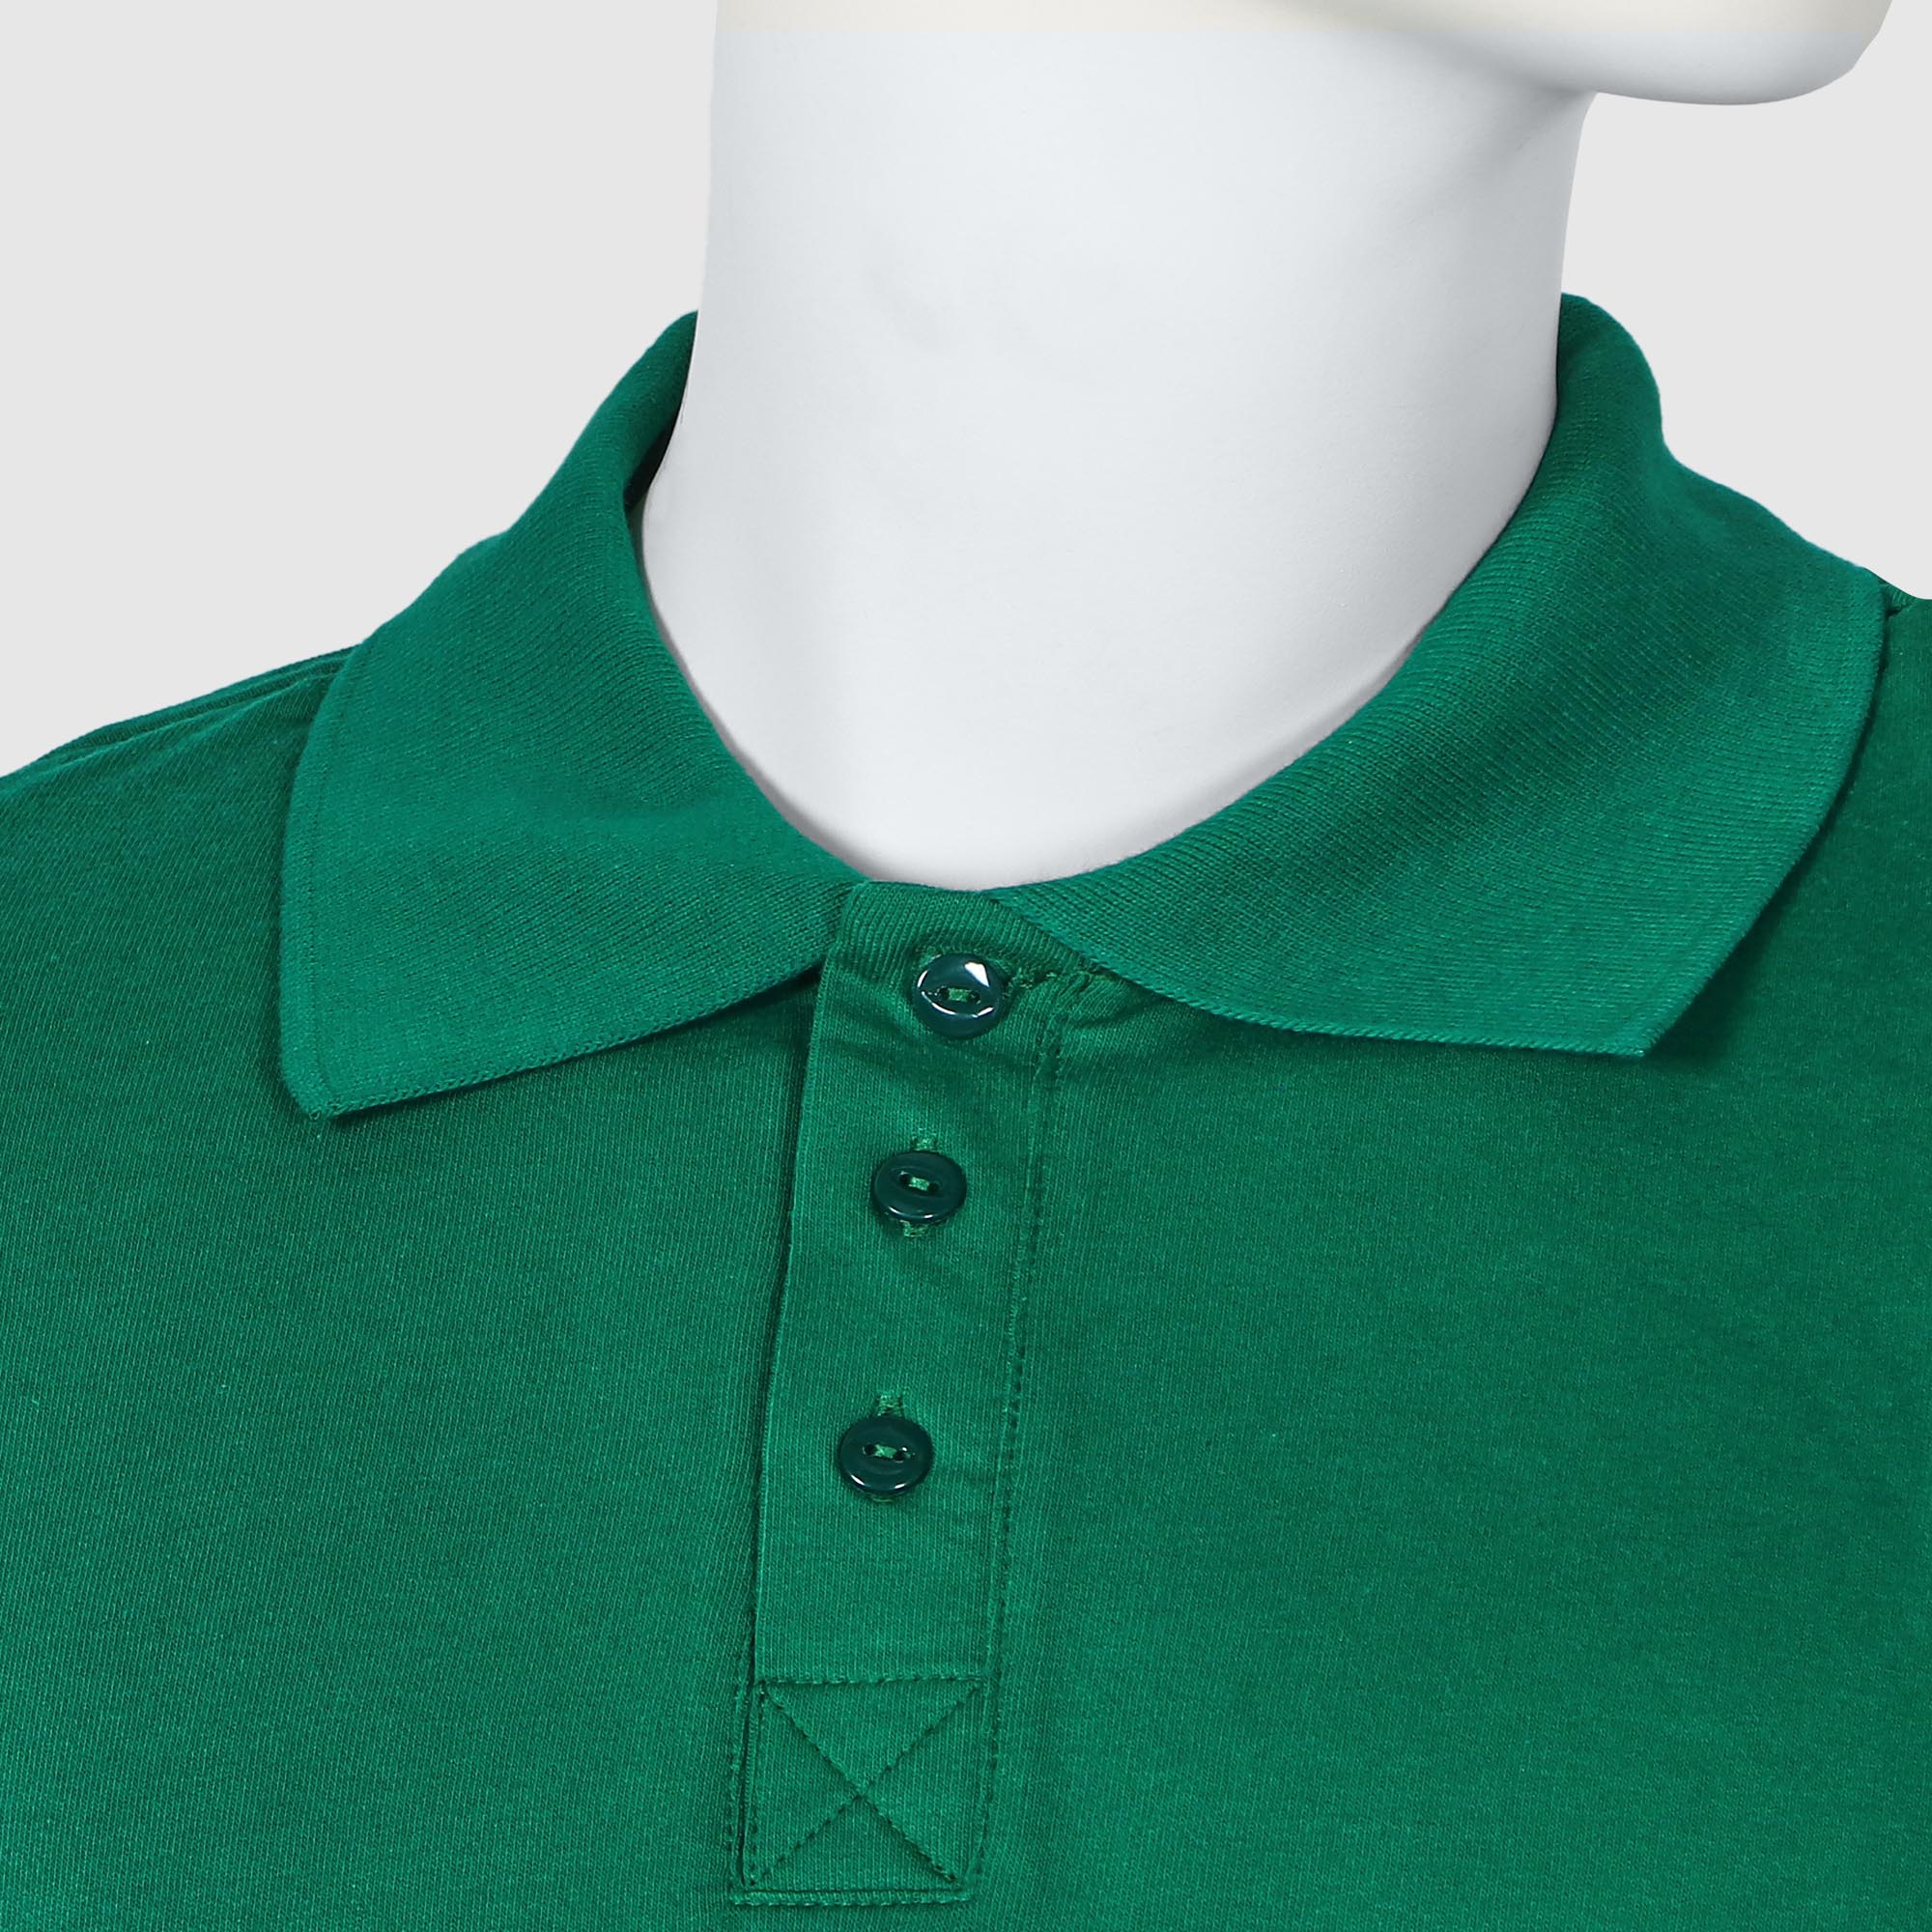 Мужская футболка-поло Diva Teks зелёная (DTD-09), цвет зелёный, размер 44-46 - фото 4